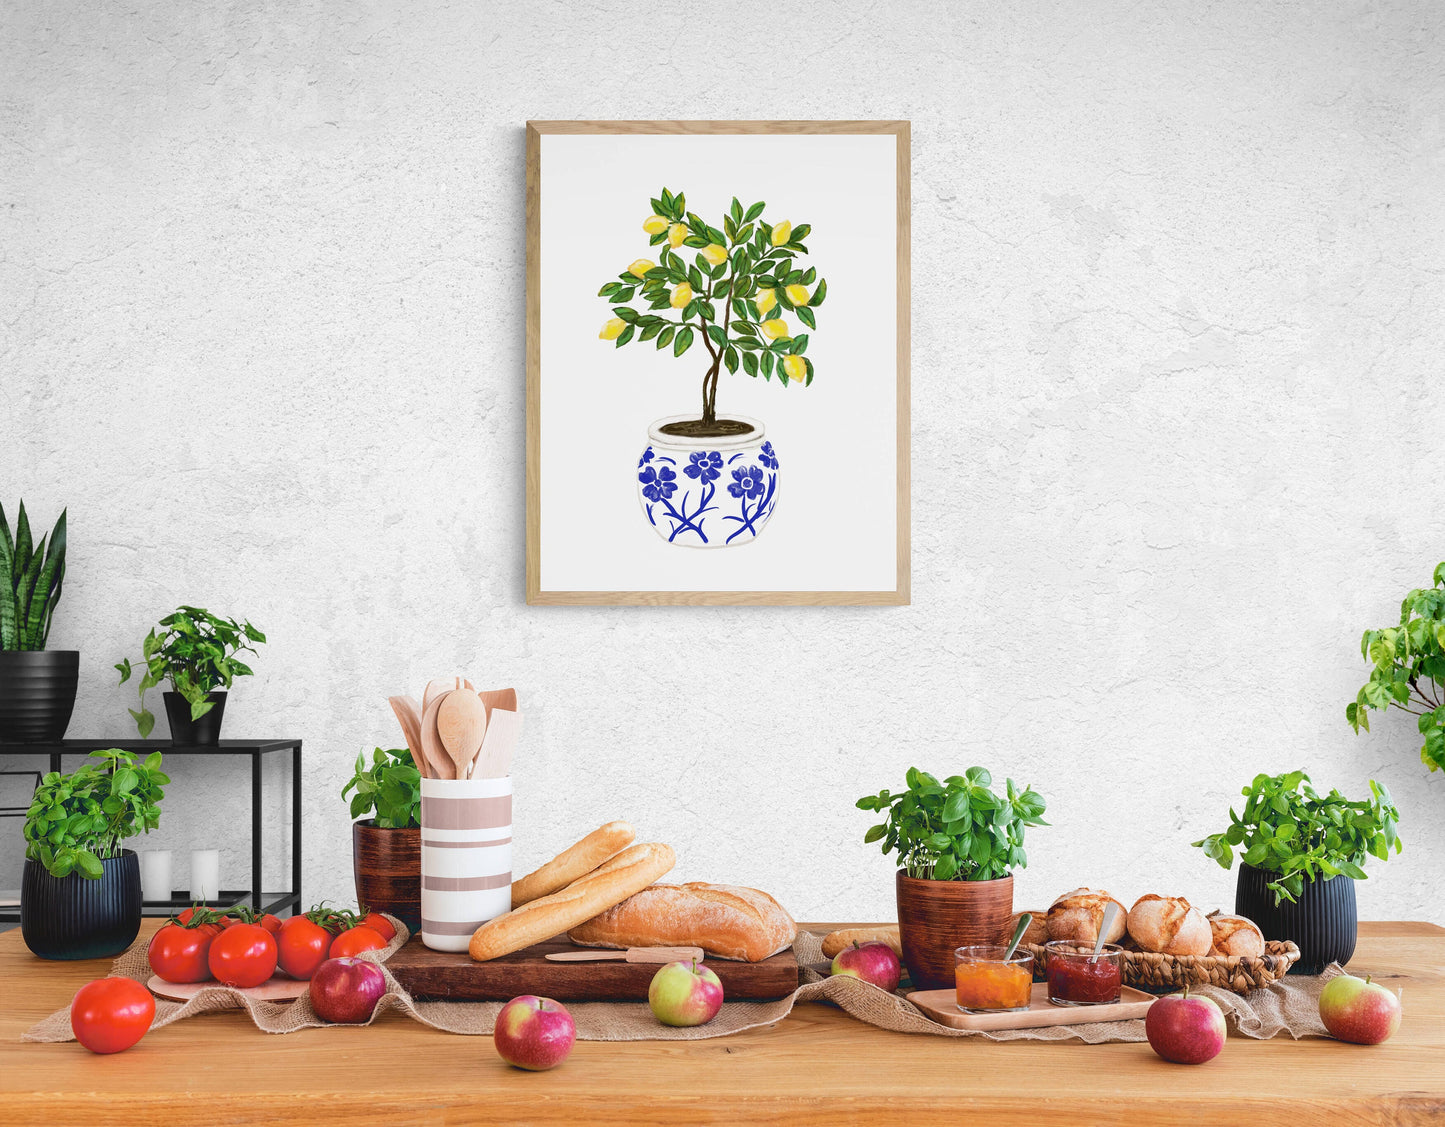 Lemon Tree Art Print, Fresh Lemons Wall Art, Blue and White Planter, Dining Room Decor, Citrus Painting, Fruit Illustration, Farmhouse Decor